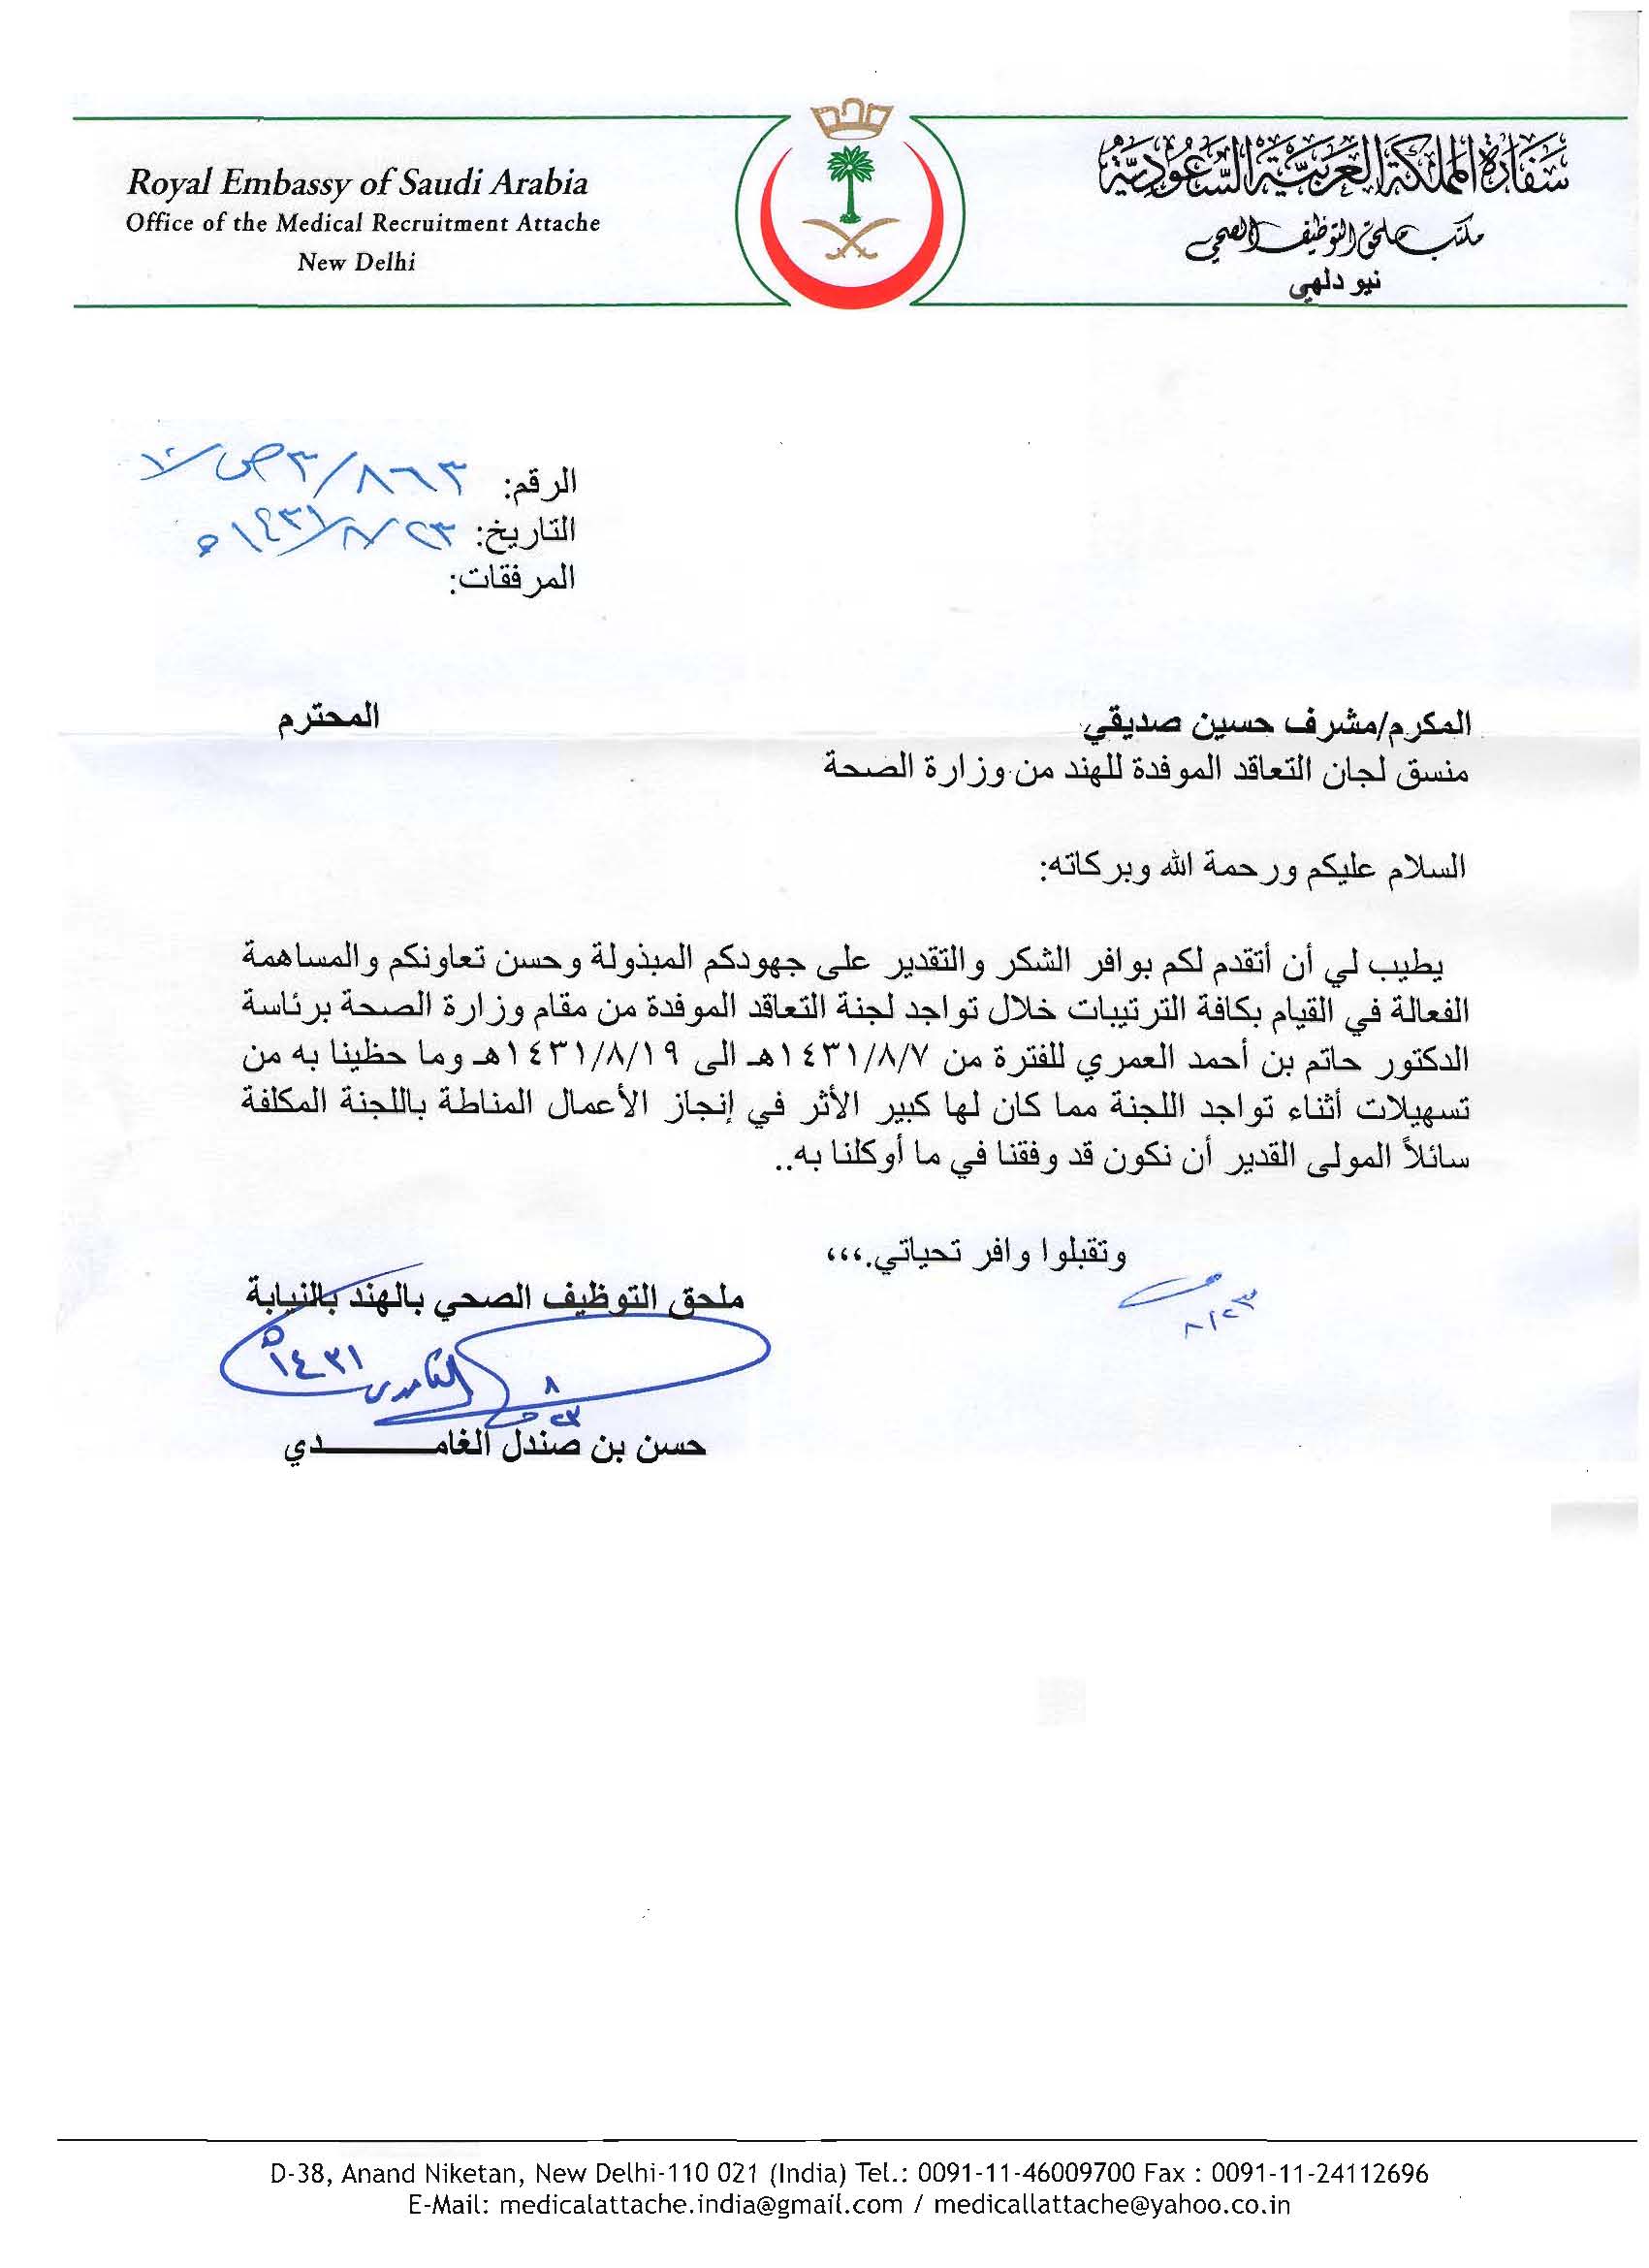 APPRECIATION BY MINISTRY OF HEALTH, KSA JULY 2010